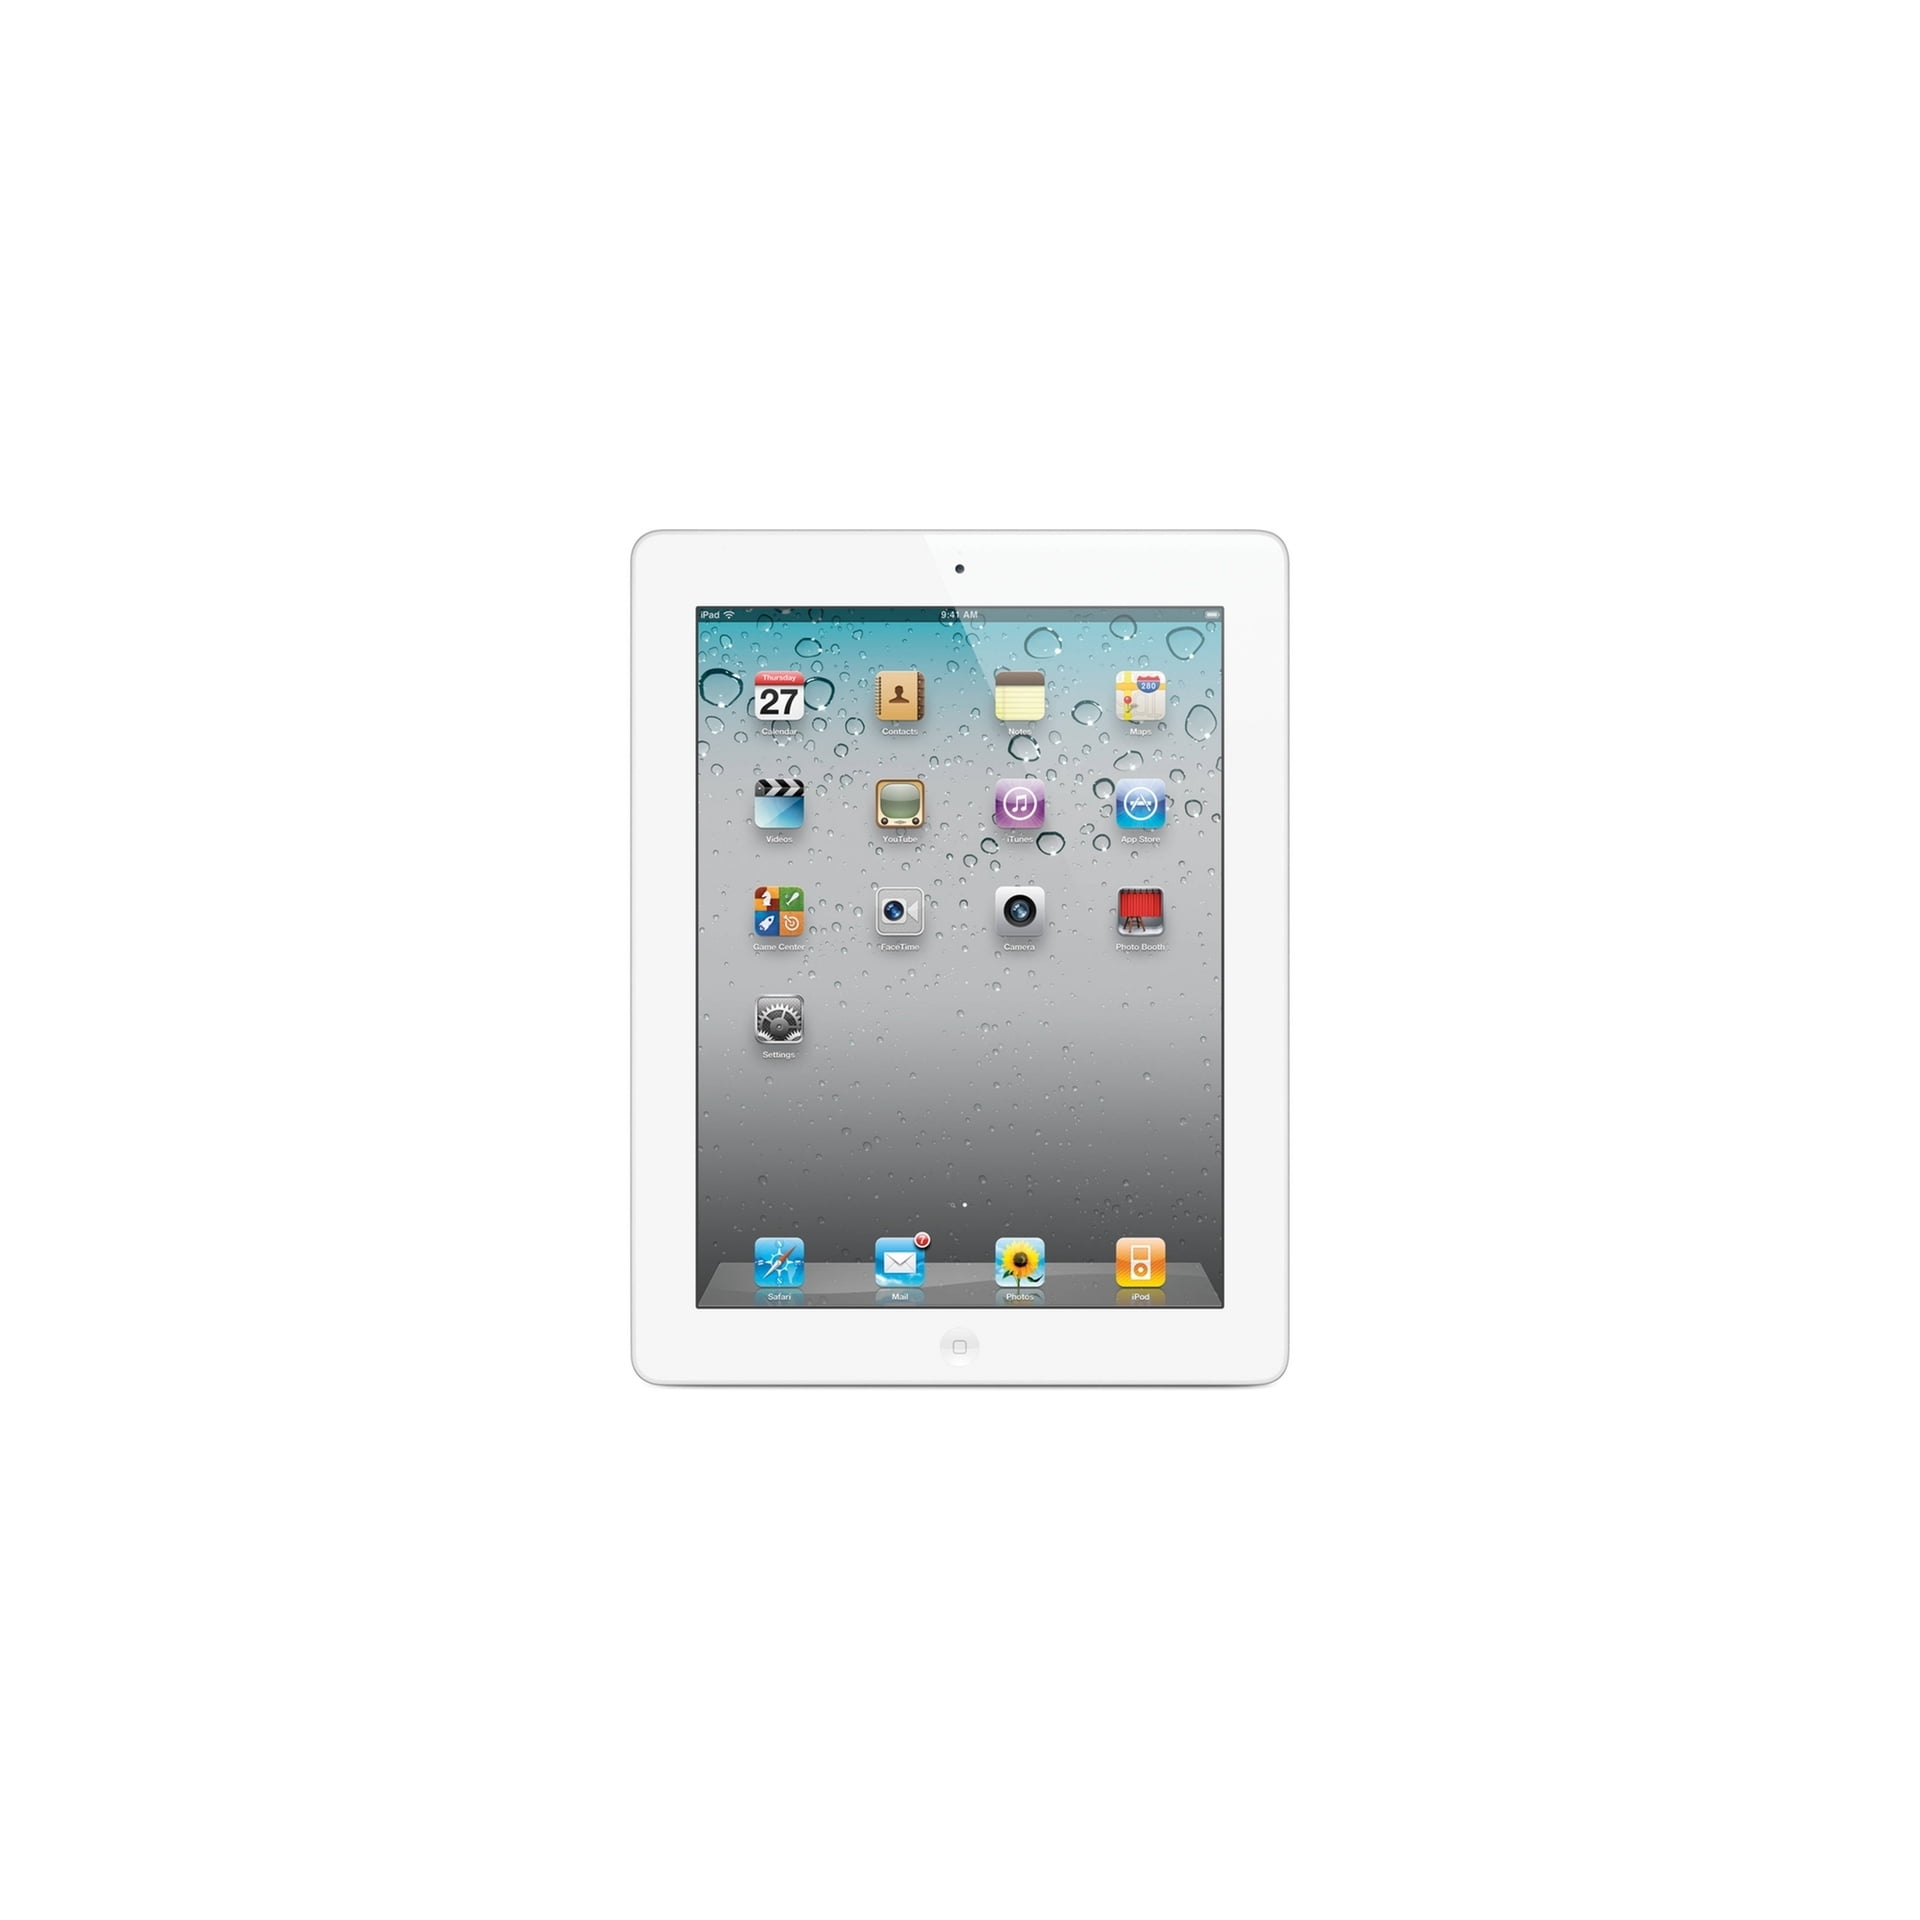 3G AT&T Unlocked Black or White Apple iPad 2nd gen 64GB Wifi R - GRADE A 